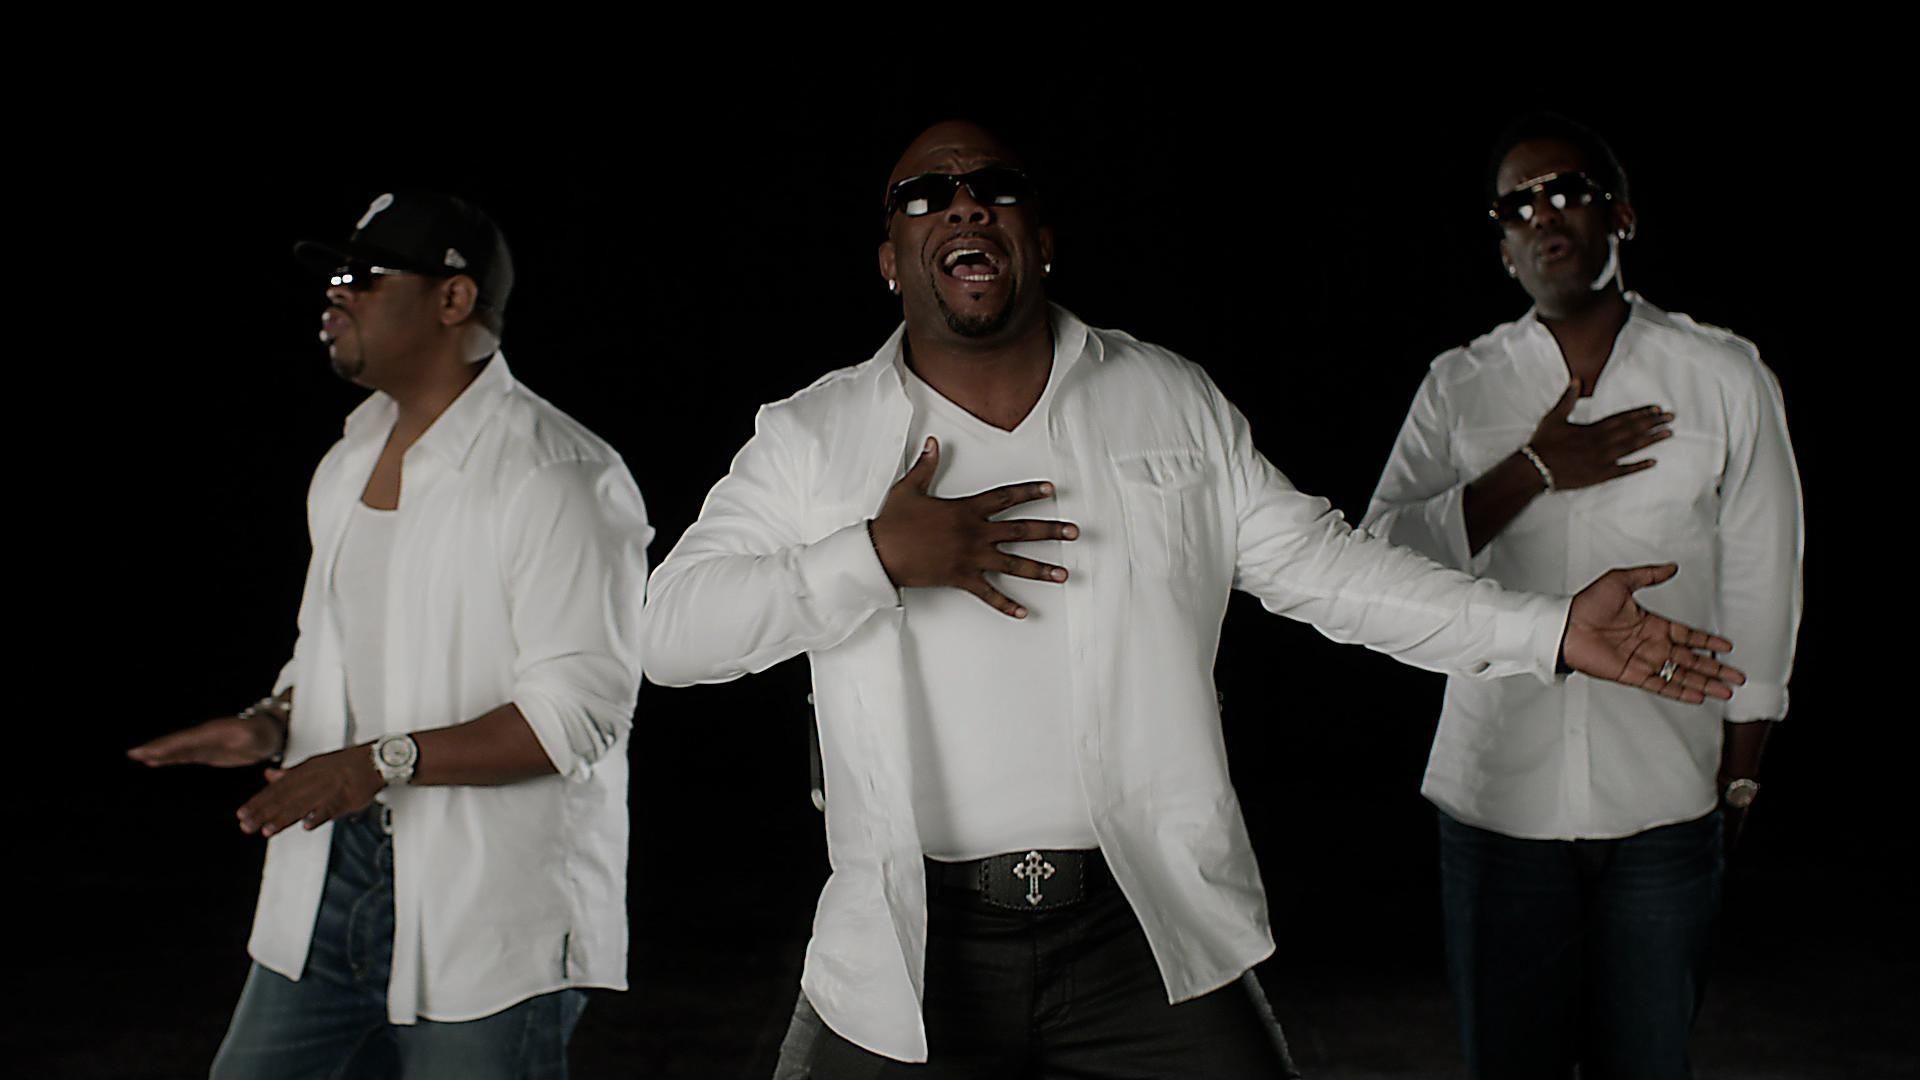 One More Dance Video. Boyz II Men